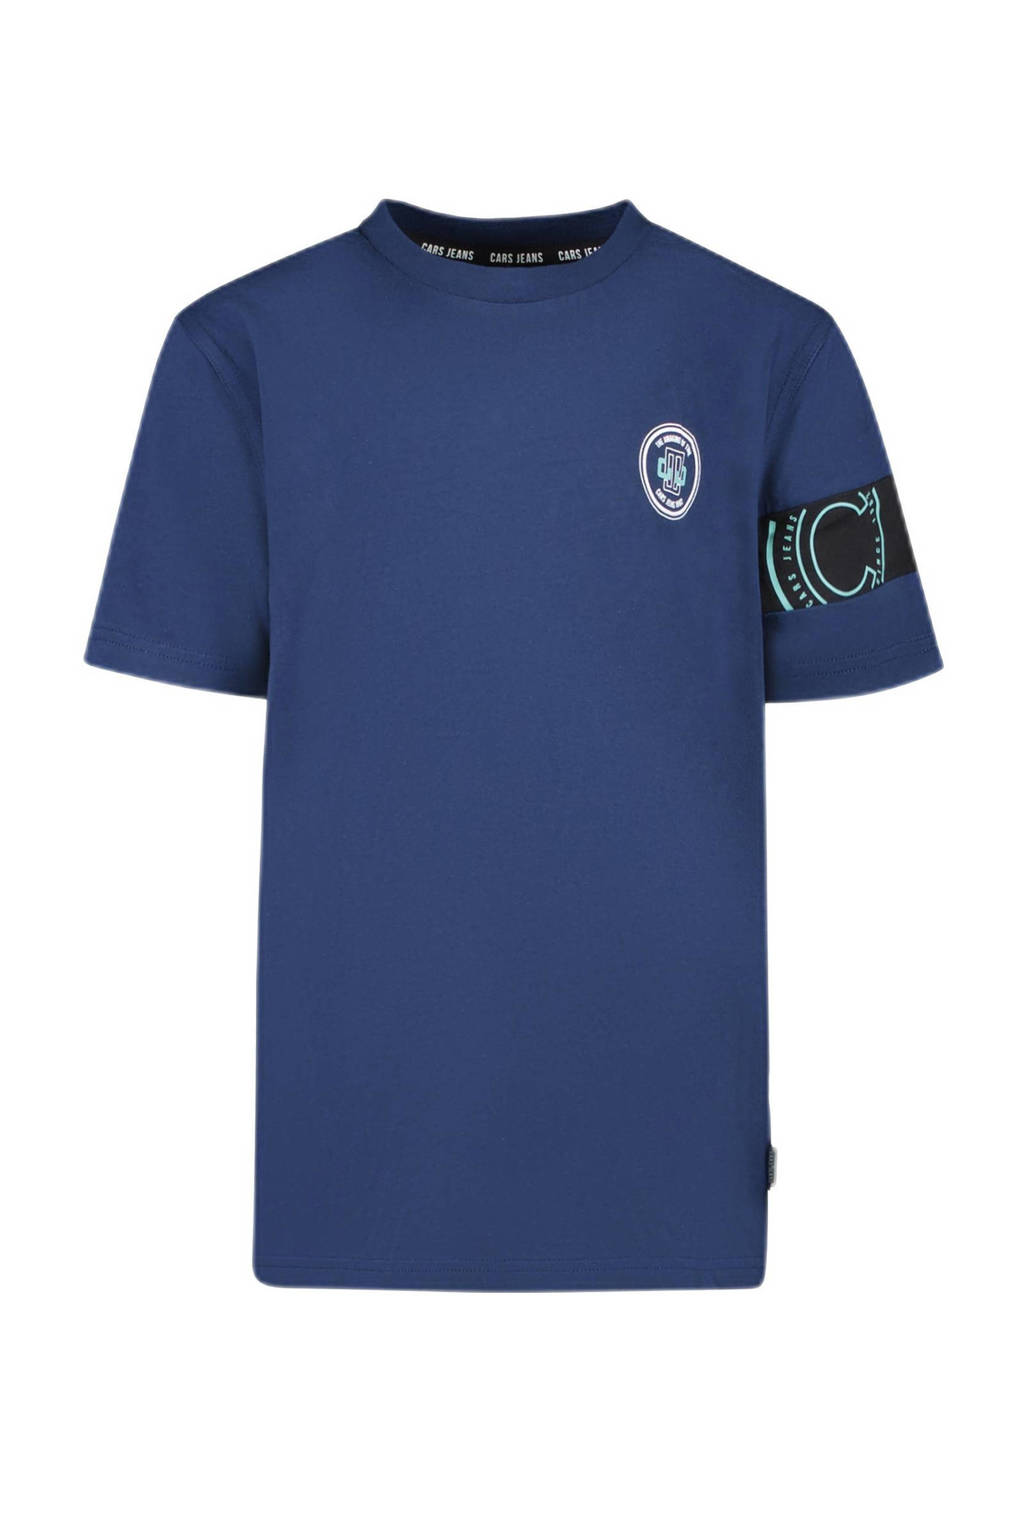 T-shirt TOEL met printopdruk hardblauw